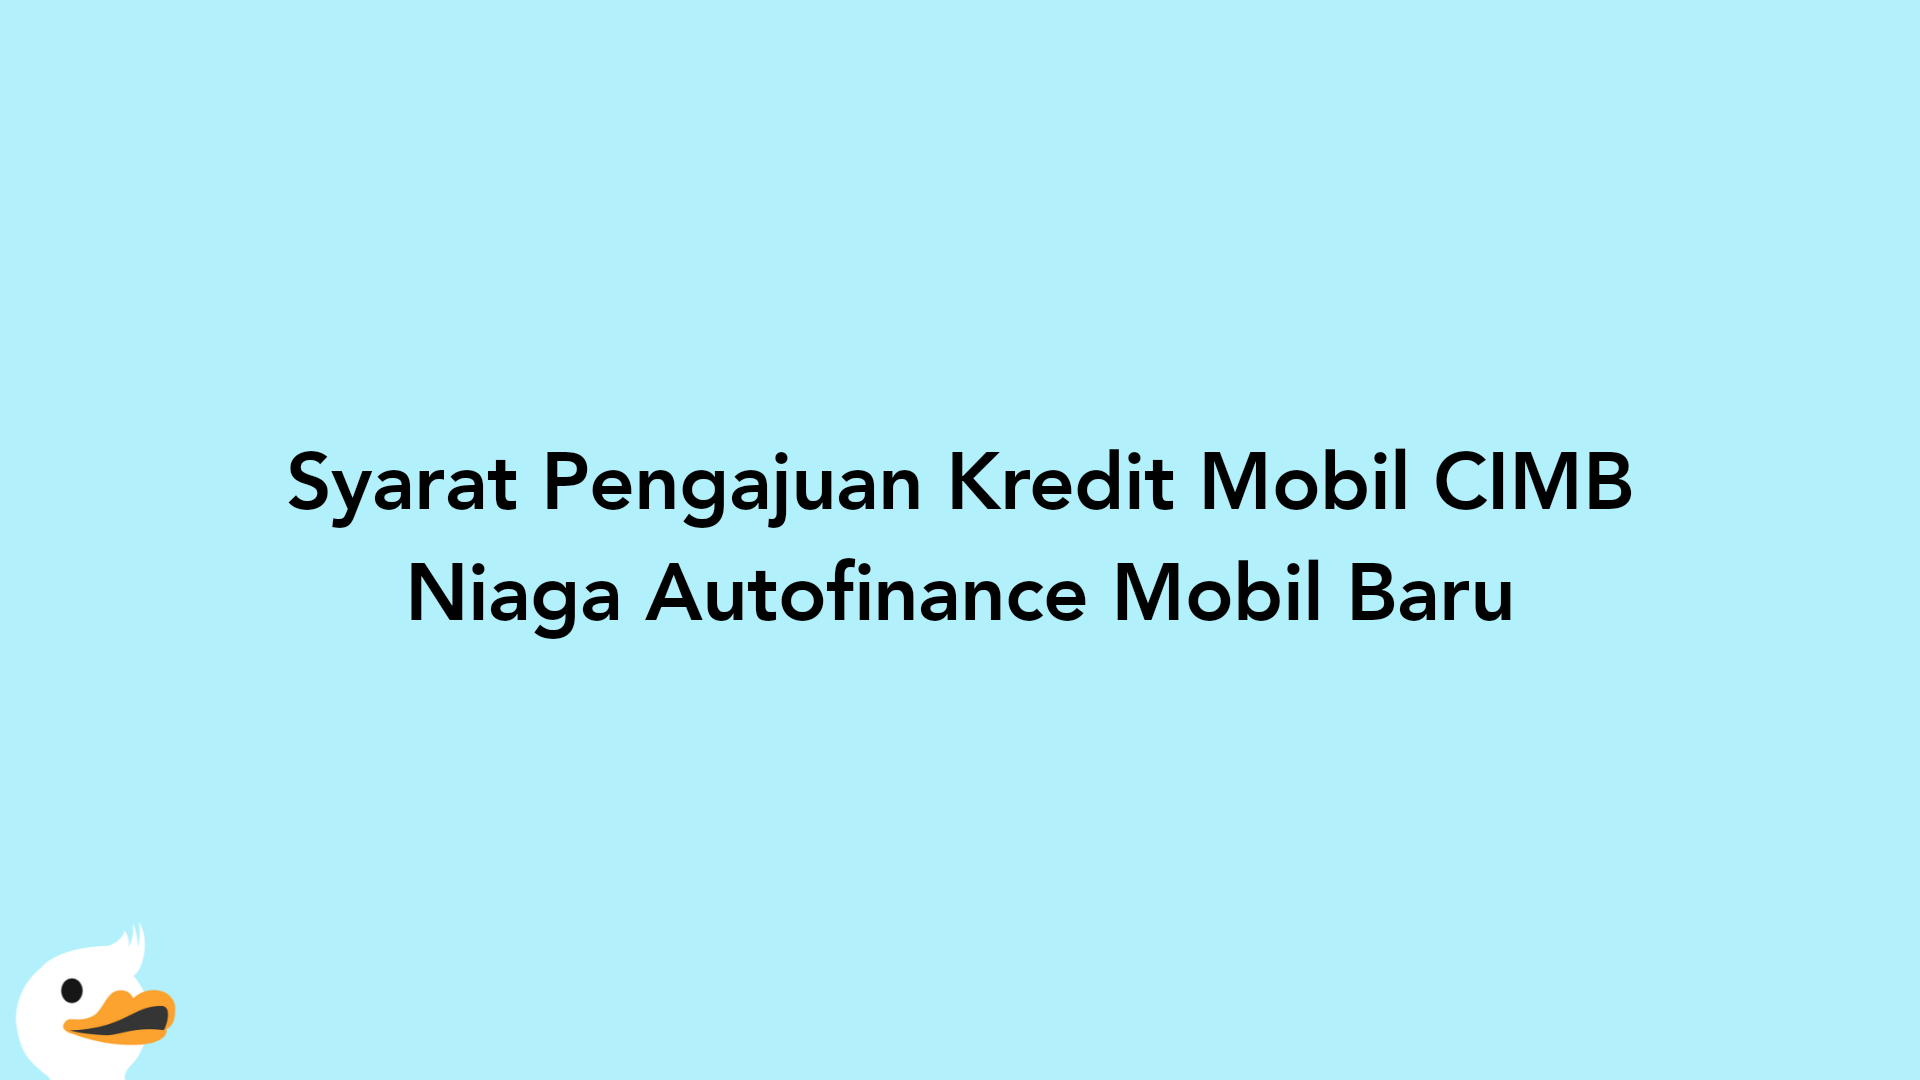 Syarat Pengajuan Kredit Mobil CIMB Niaga Autofinance Mobil Baru